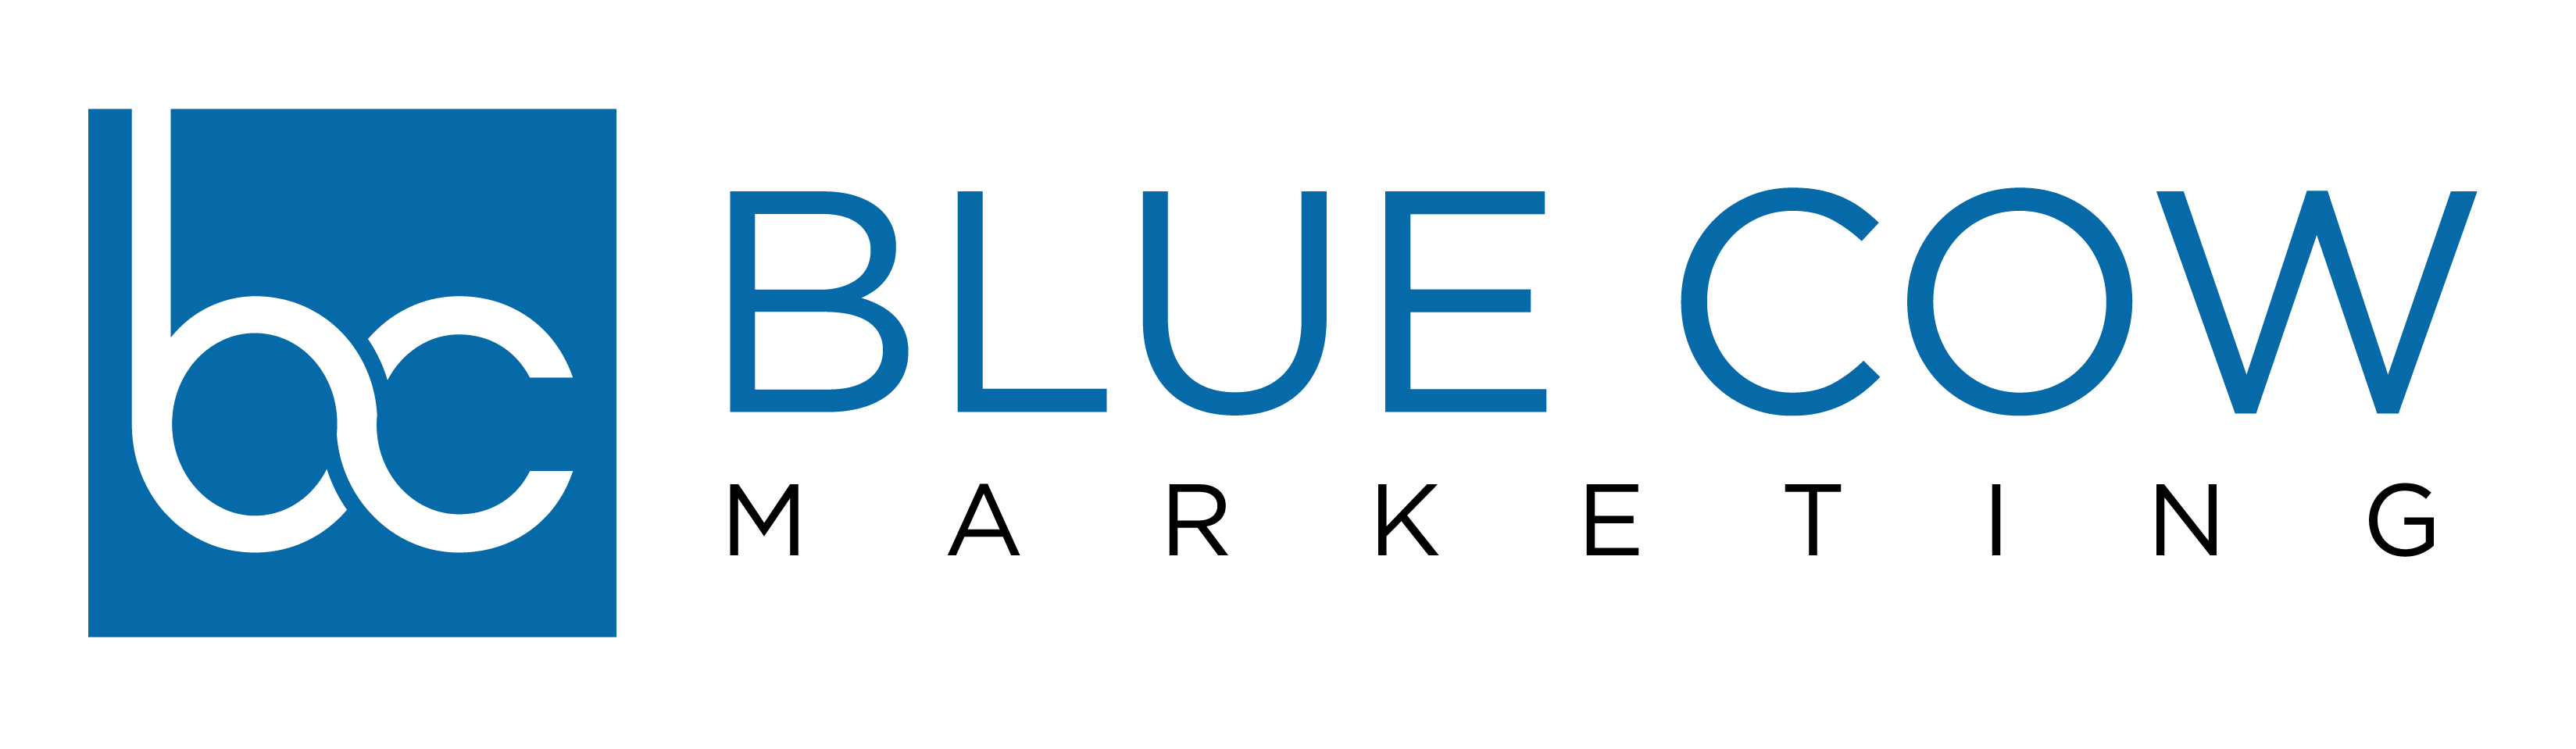 Blue cow logo